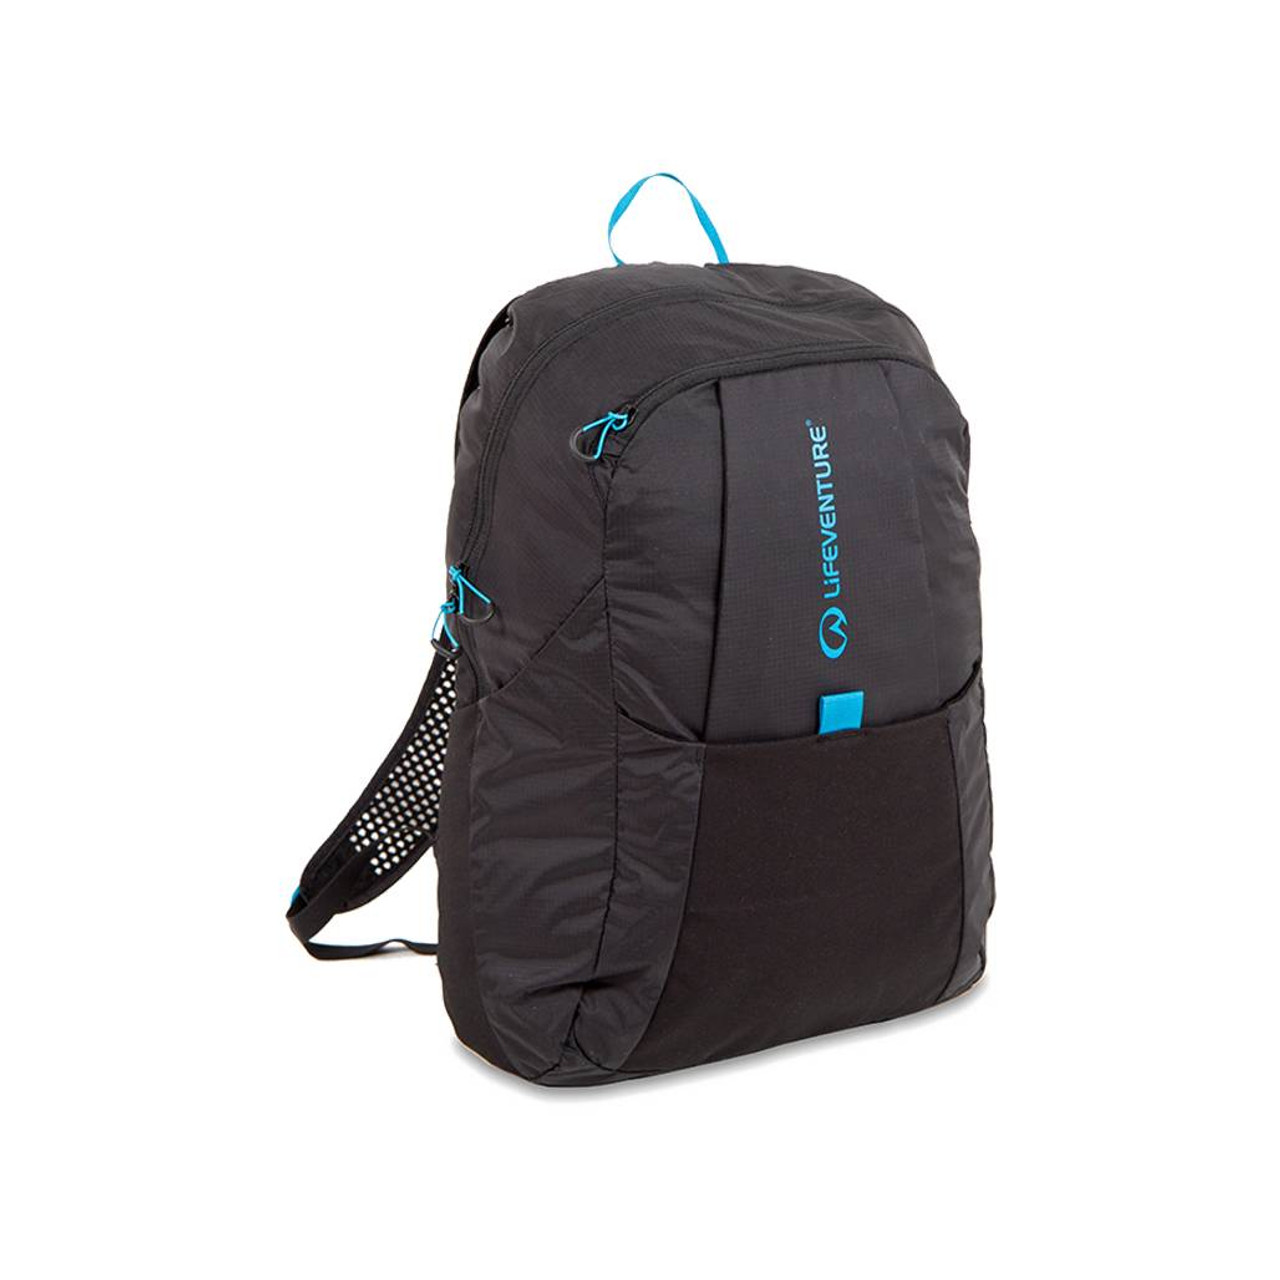 Lifeventure Silk Ultimate Sleeping Bag Liner review - Active-Traveller